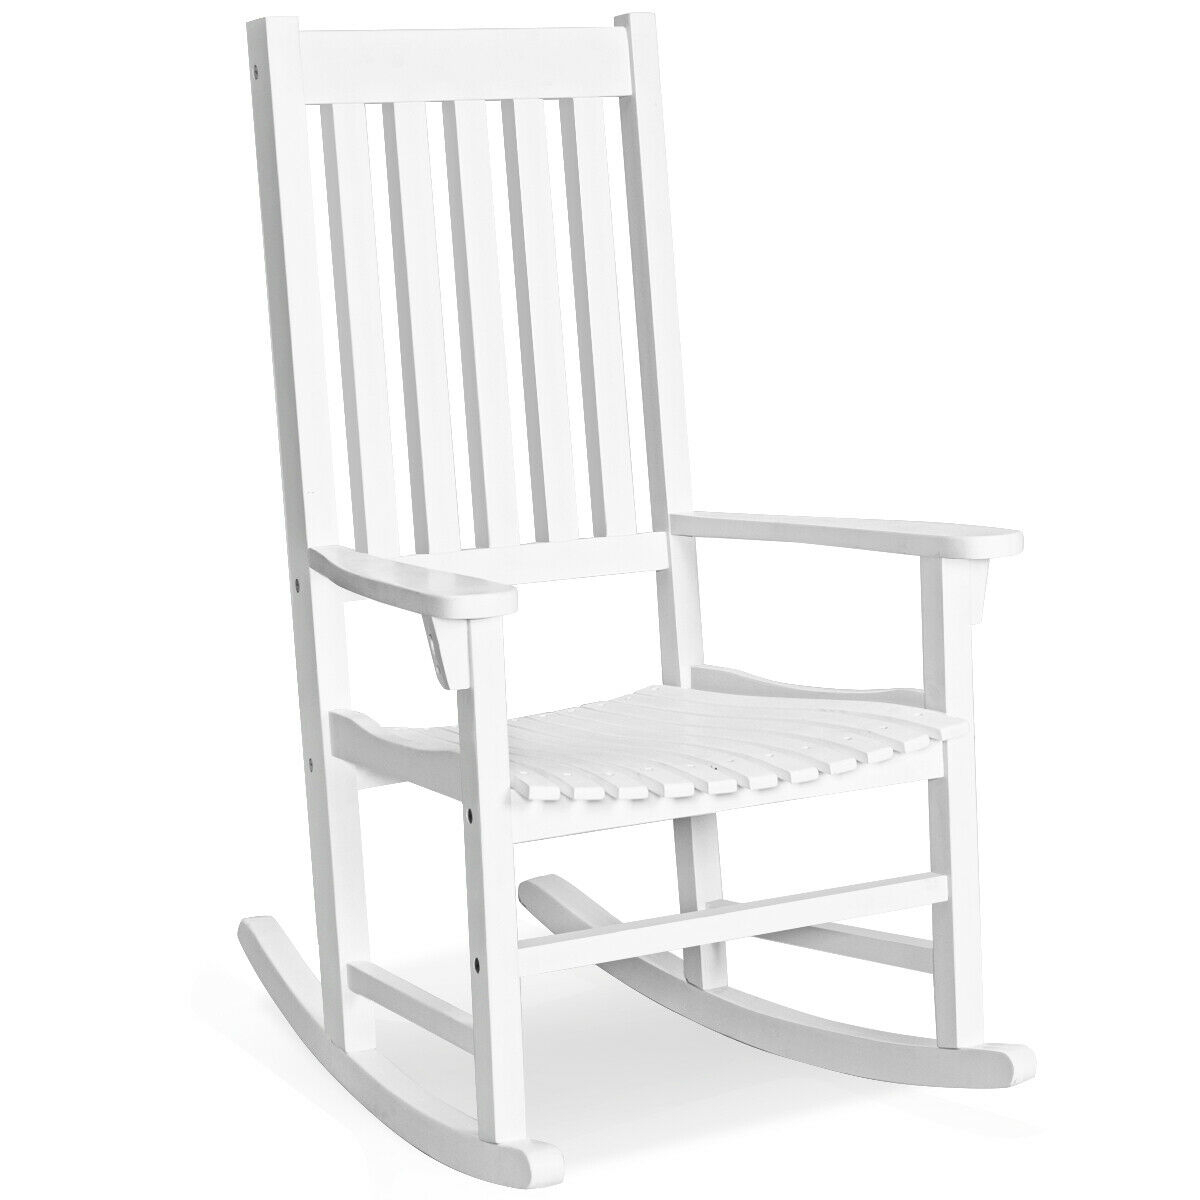 Wooden Rocking Chair Porch Rocker High Back Garden Seat For Indoor Outdoor - White